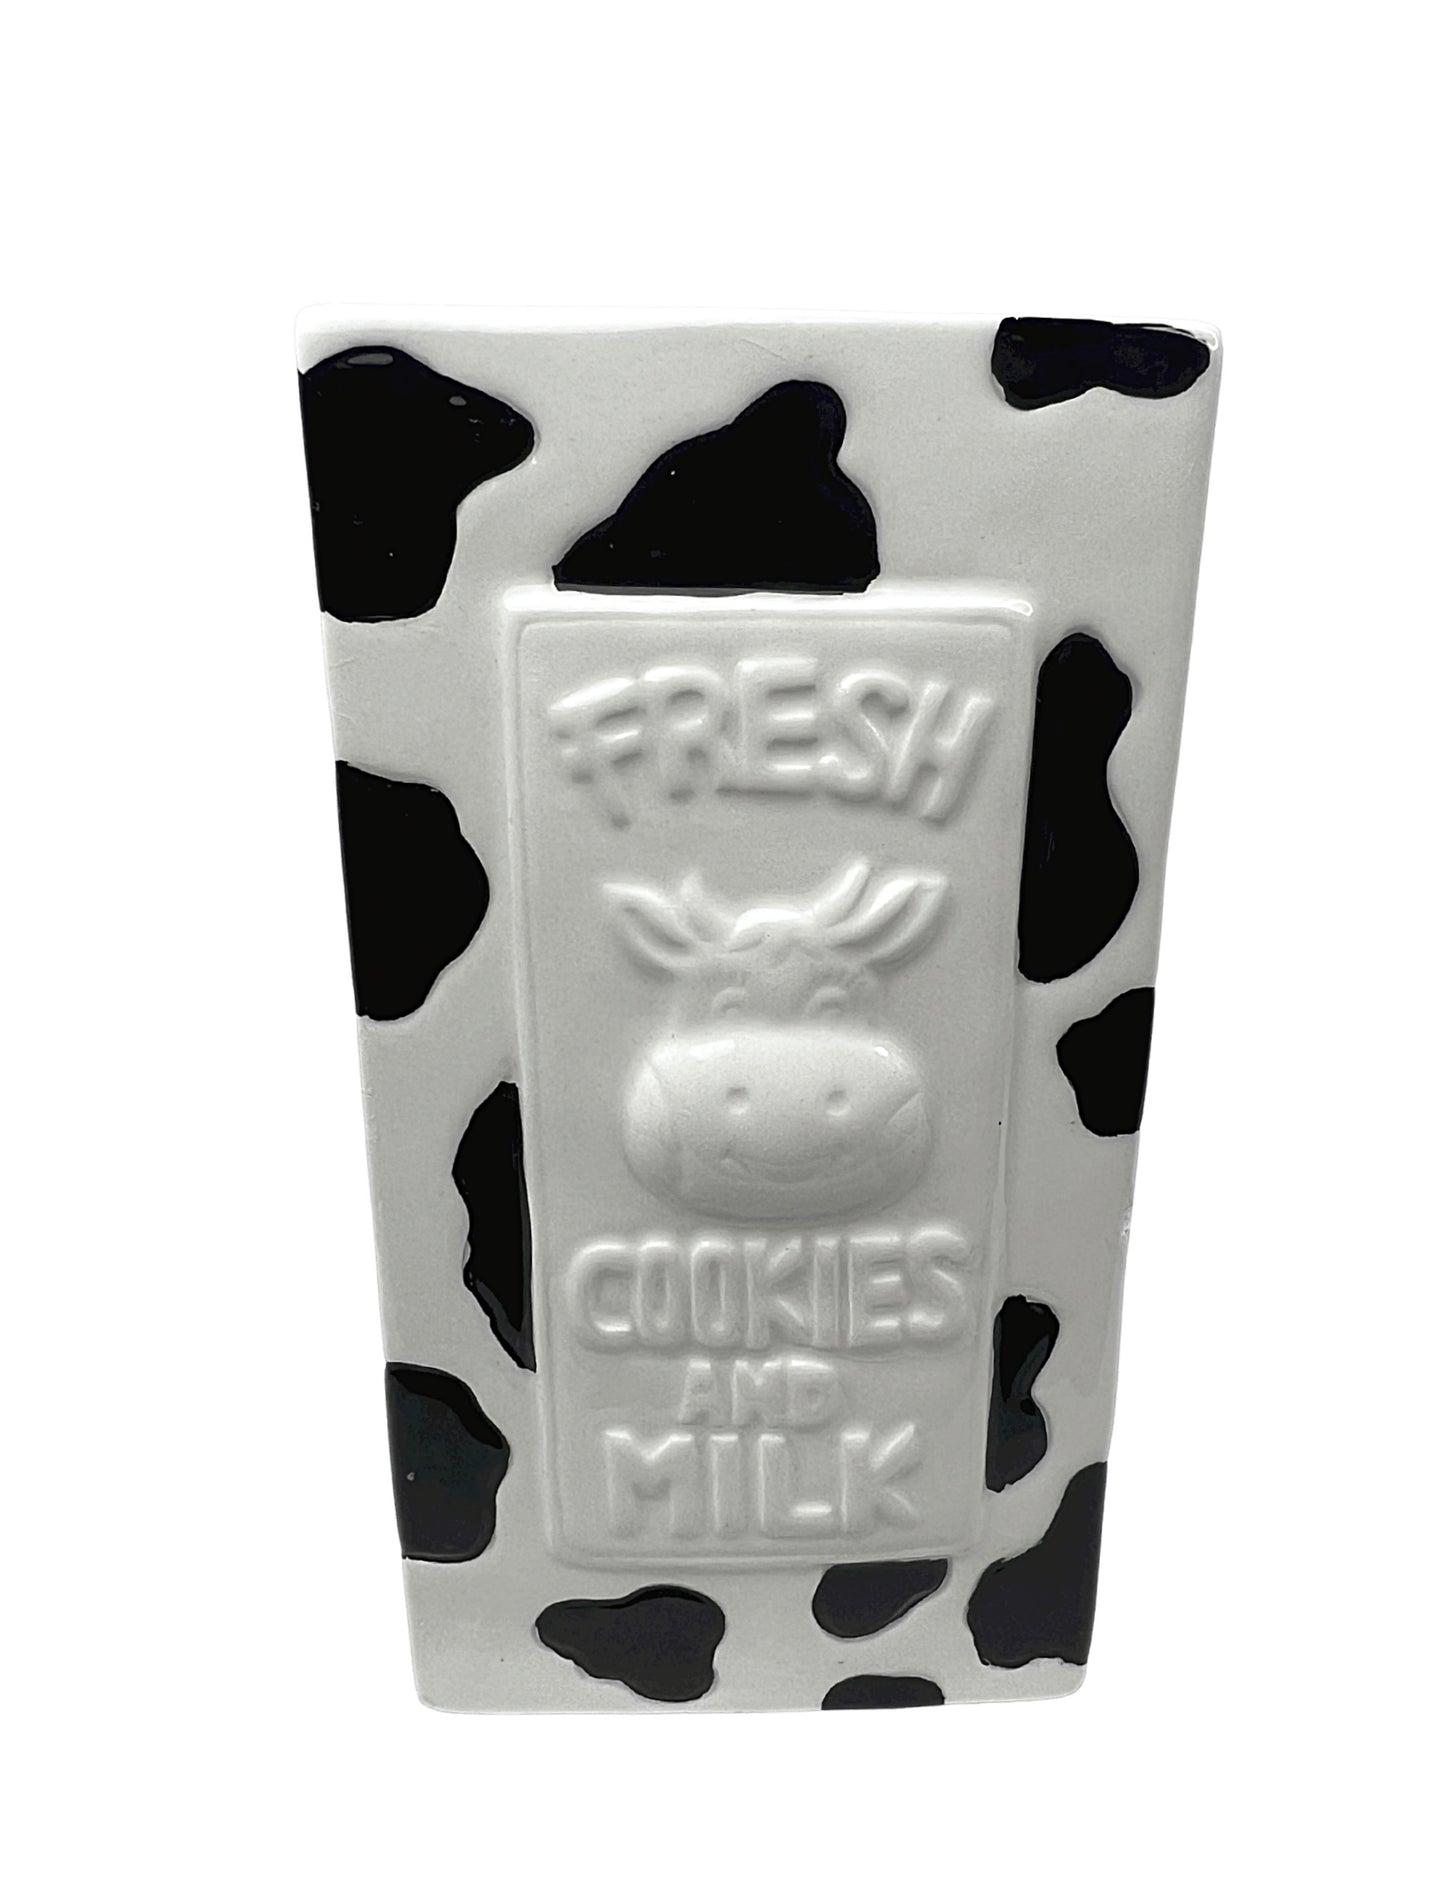 90’s Fresh Cookies & Milk Cow Print Milk Carton Vase